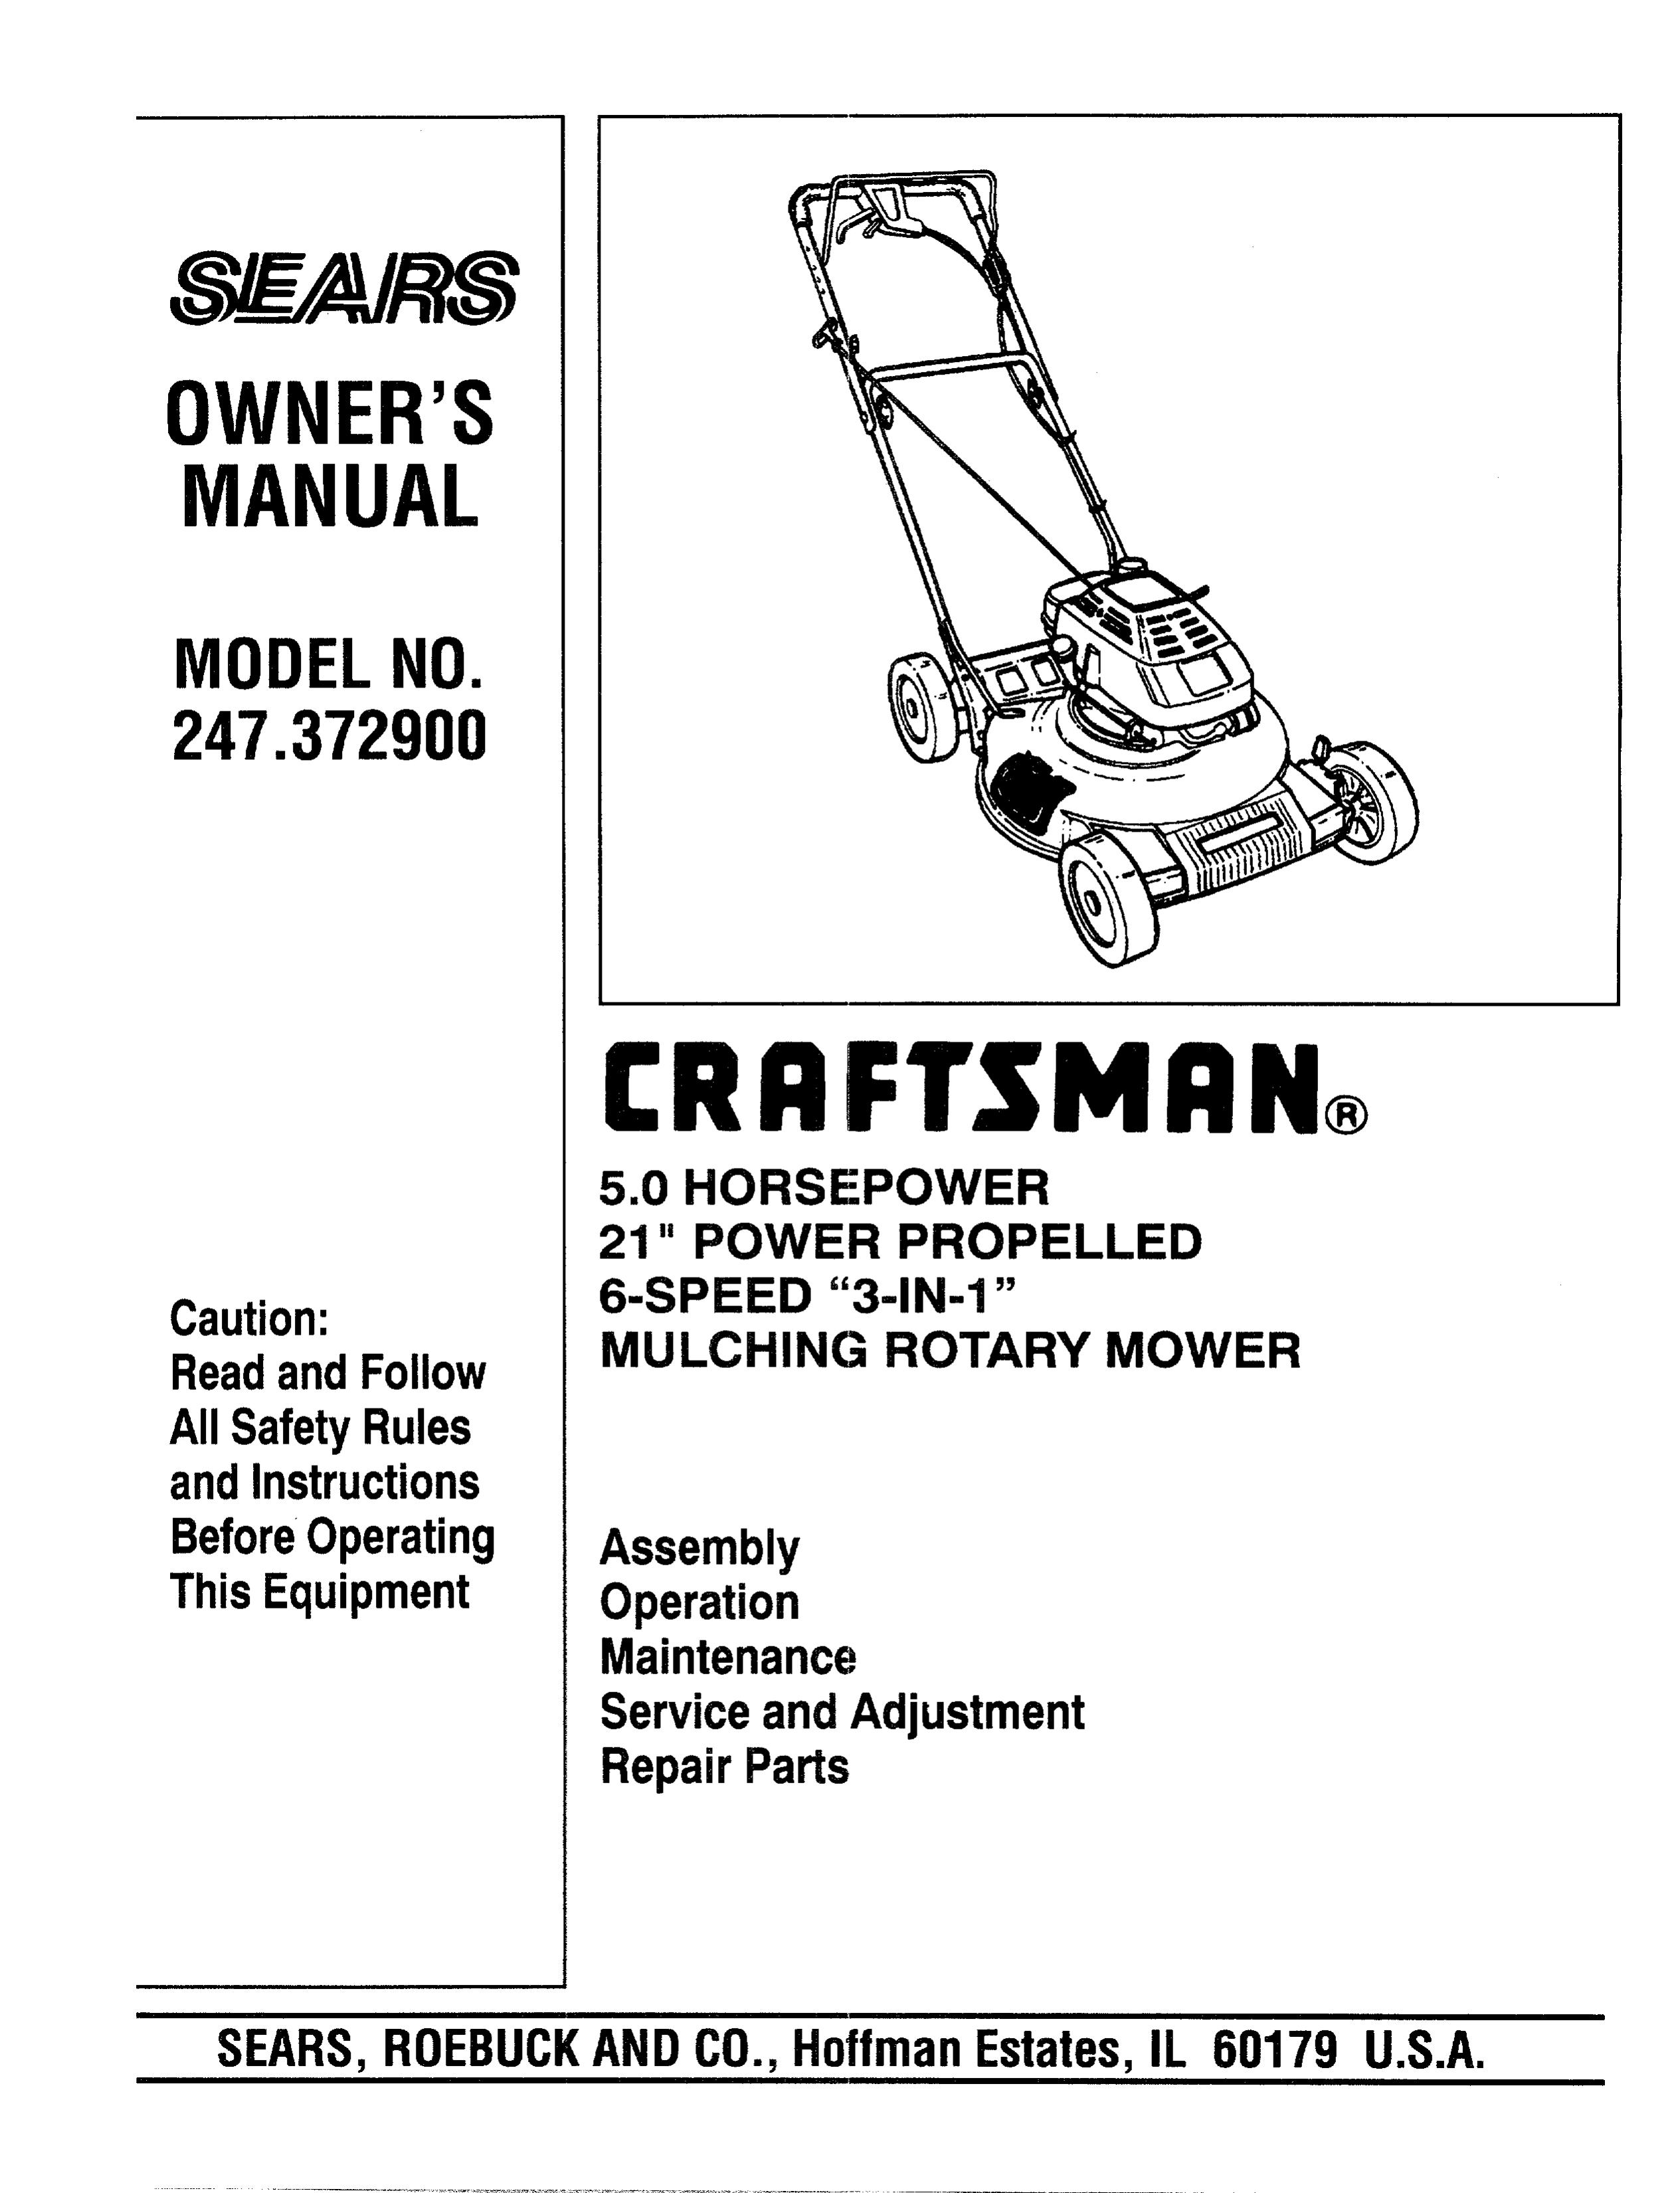 Craftsman 247.3729 Lawn Mower User Manual